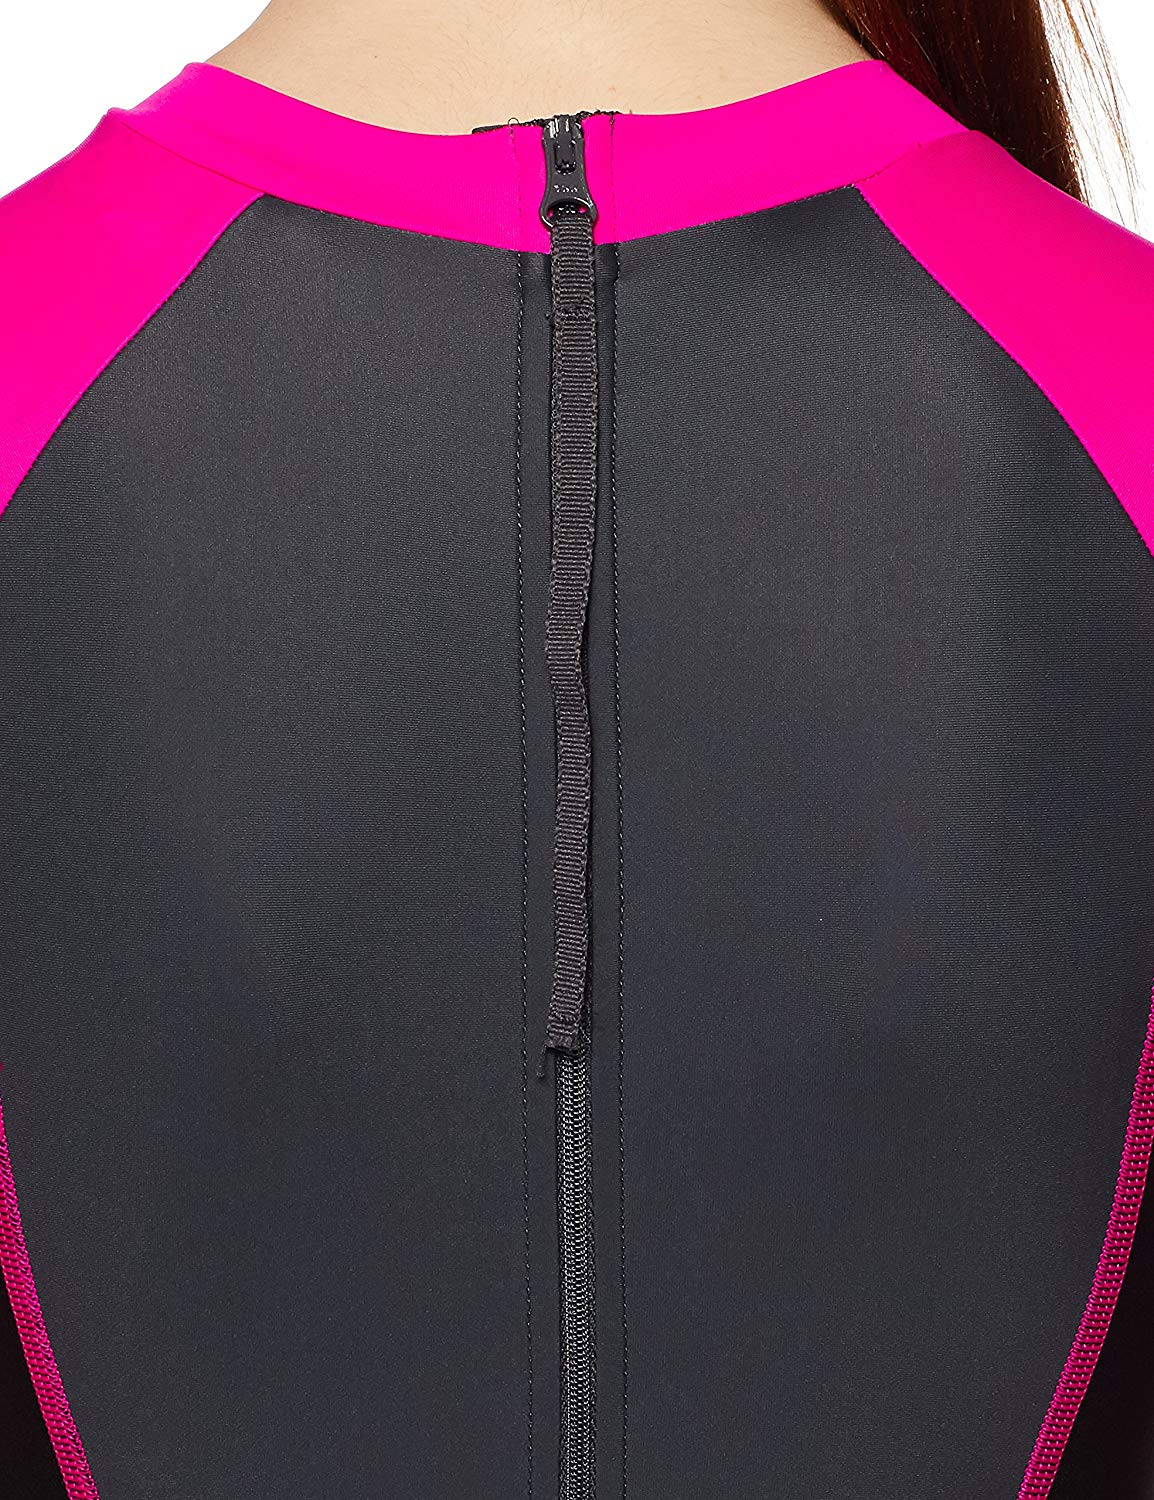 Speedo Female Swimwear Essential Spliced Kneesuit (Oxide Grey/Black/Electric Pink) - Best Price online Prokicksports.com